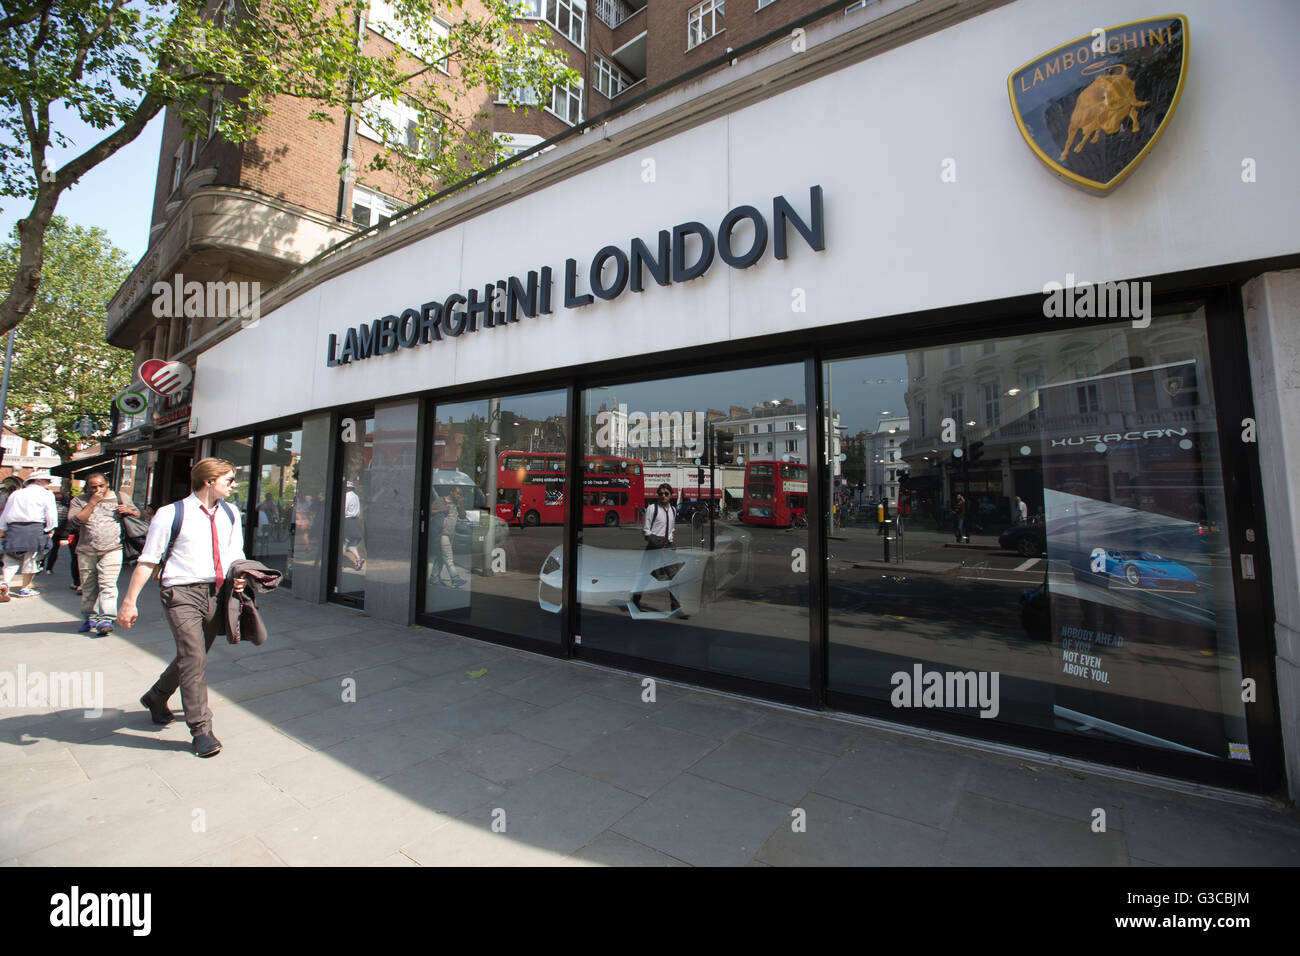 Lamborghini London, luxury sports car dealership, Old Brompton Road, South Kensington, London, England, UK Stock Photo